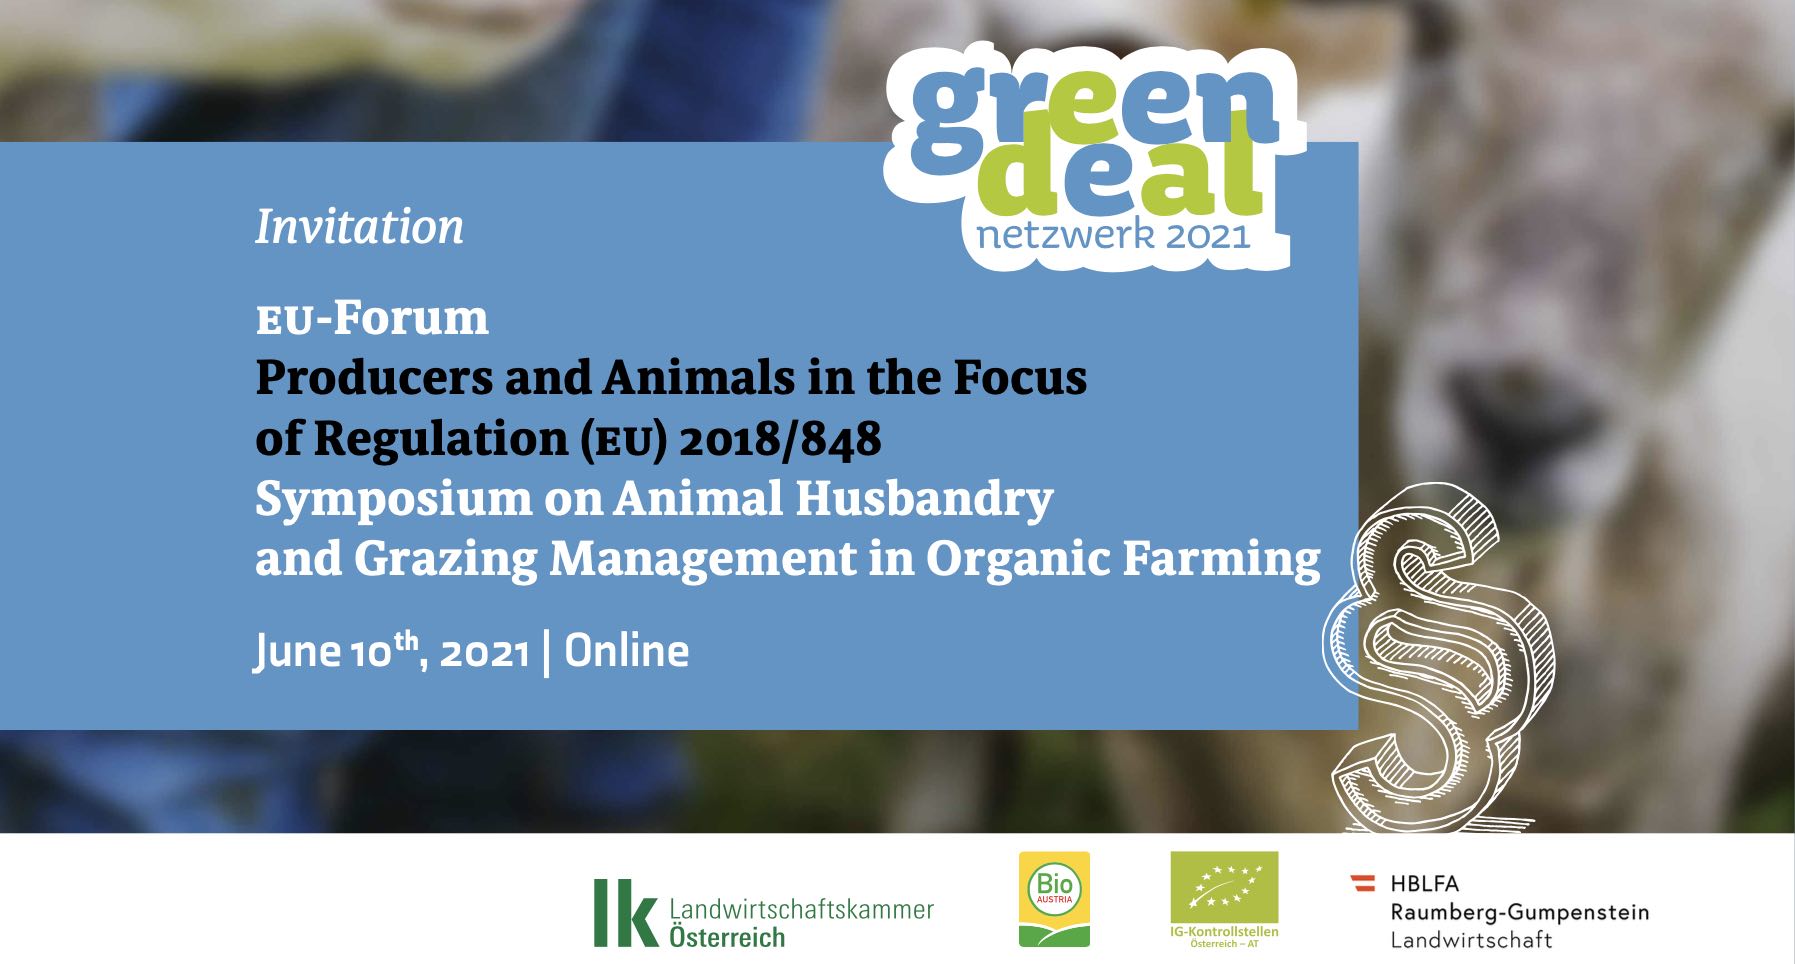 Symposium on animal husbandry and grazing management in organic farming